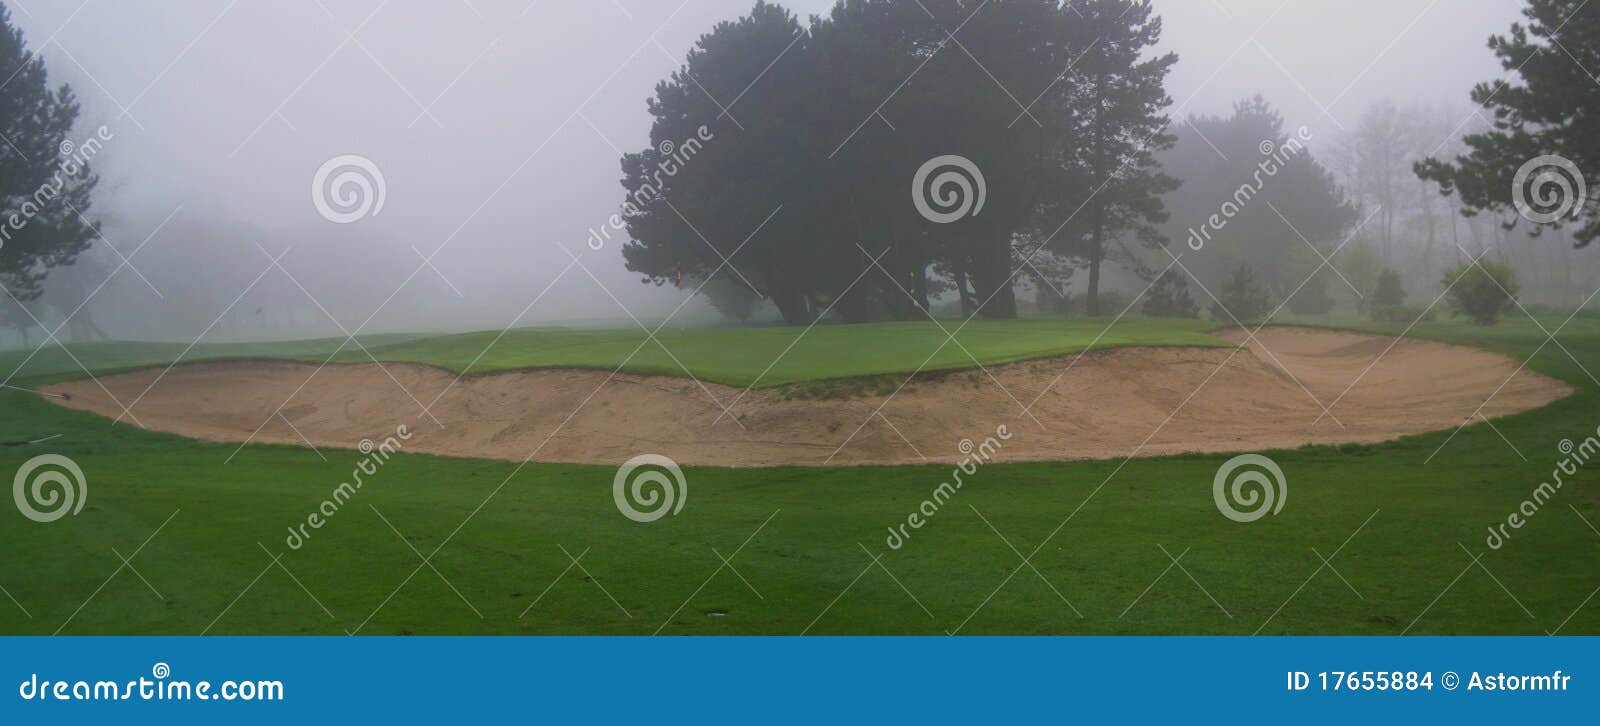 foggy golf bunker